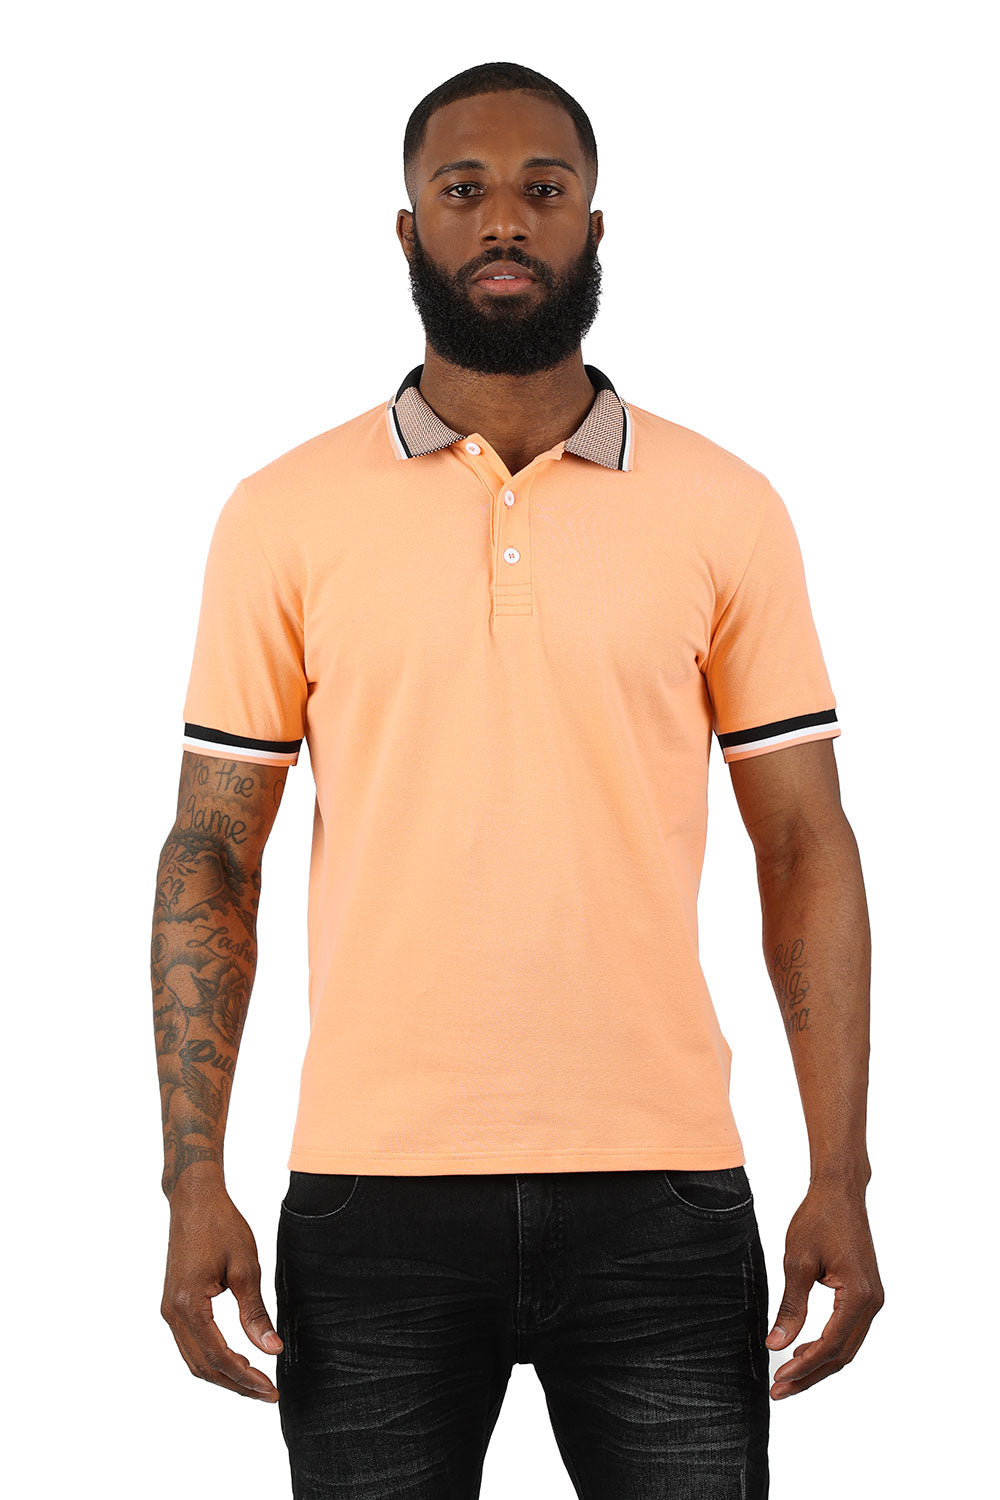 BARABAS Men's Premium Solid Color Short Sleeve Polo shirts 3PP839 Peach